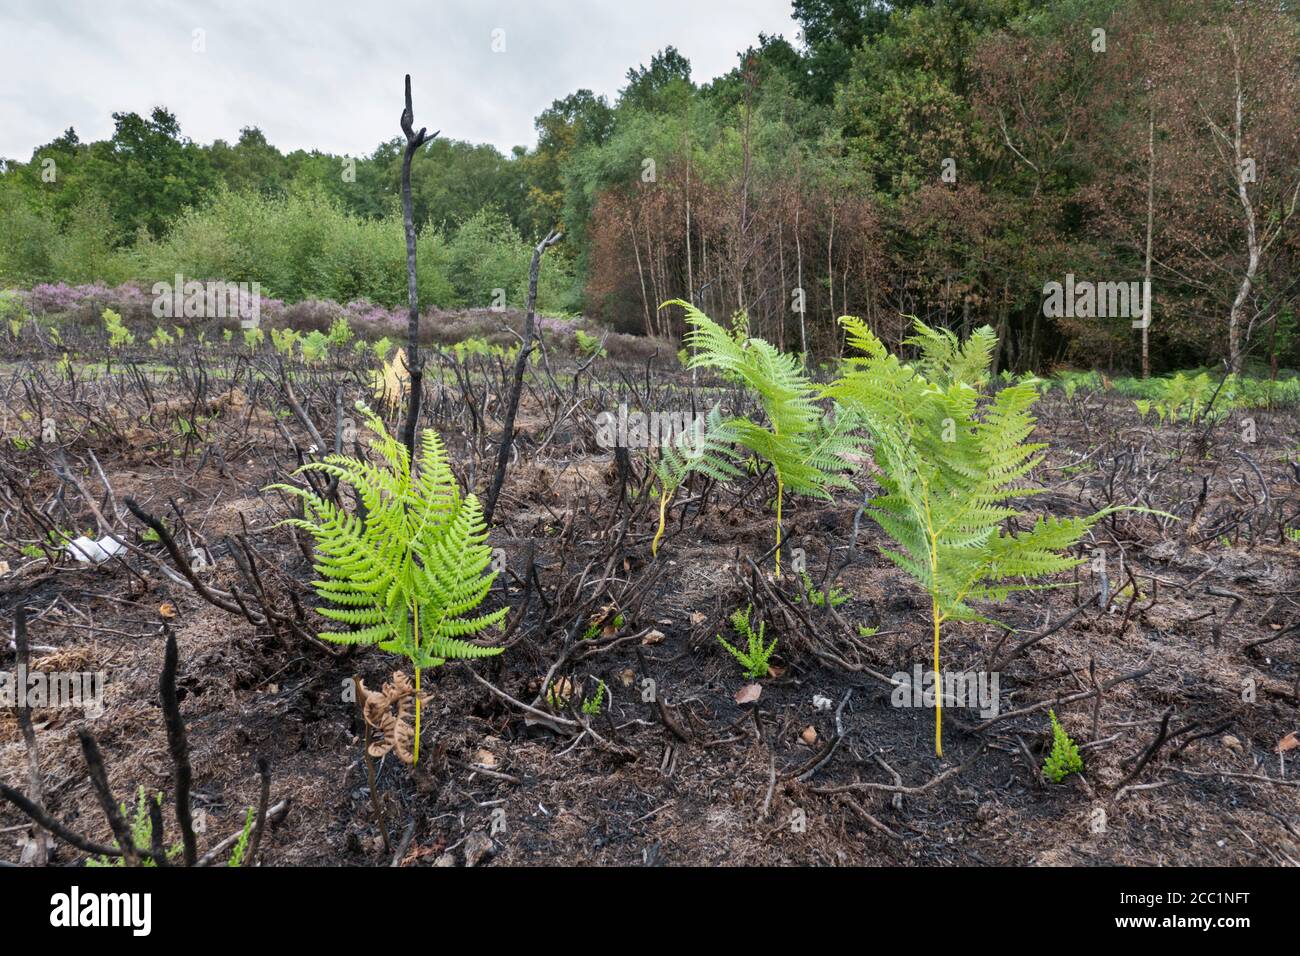 Green shoots of bracken re-growing after fire destroyed habitat, Snelsmore Common, Newbury, West Berkshire, England, United Kingdom, Europe Stock Photo